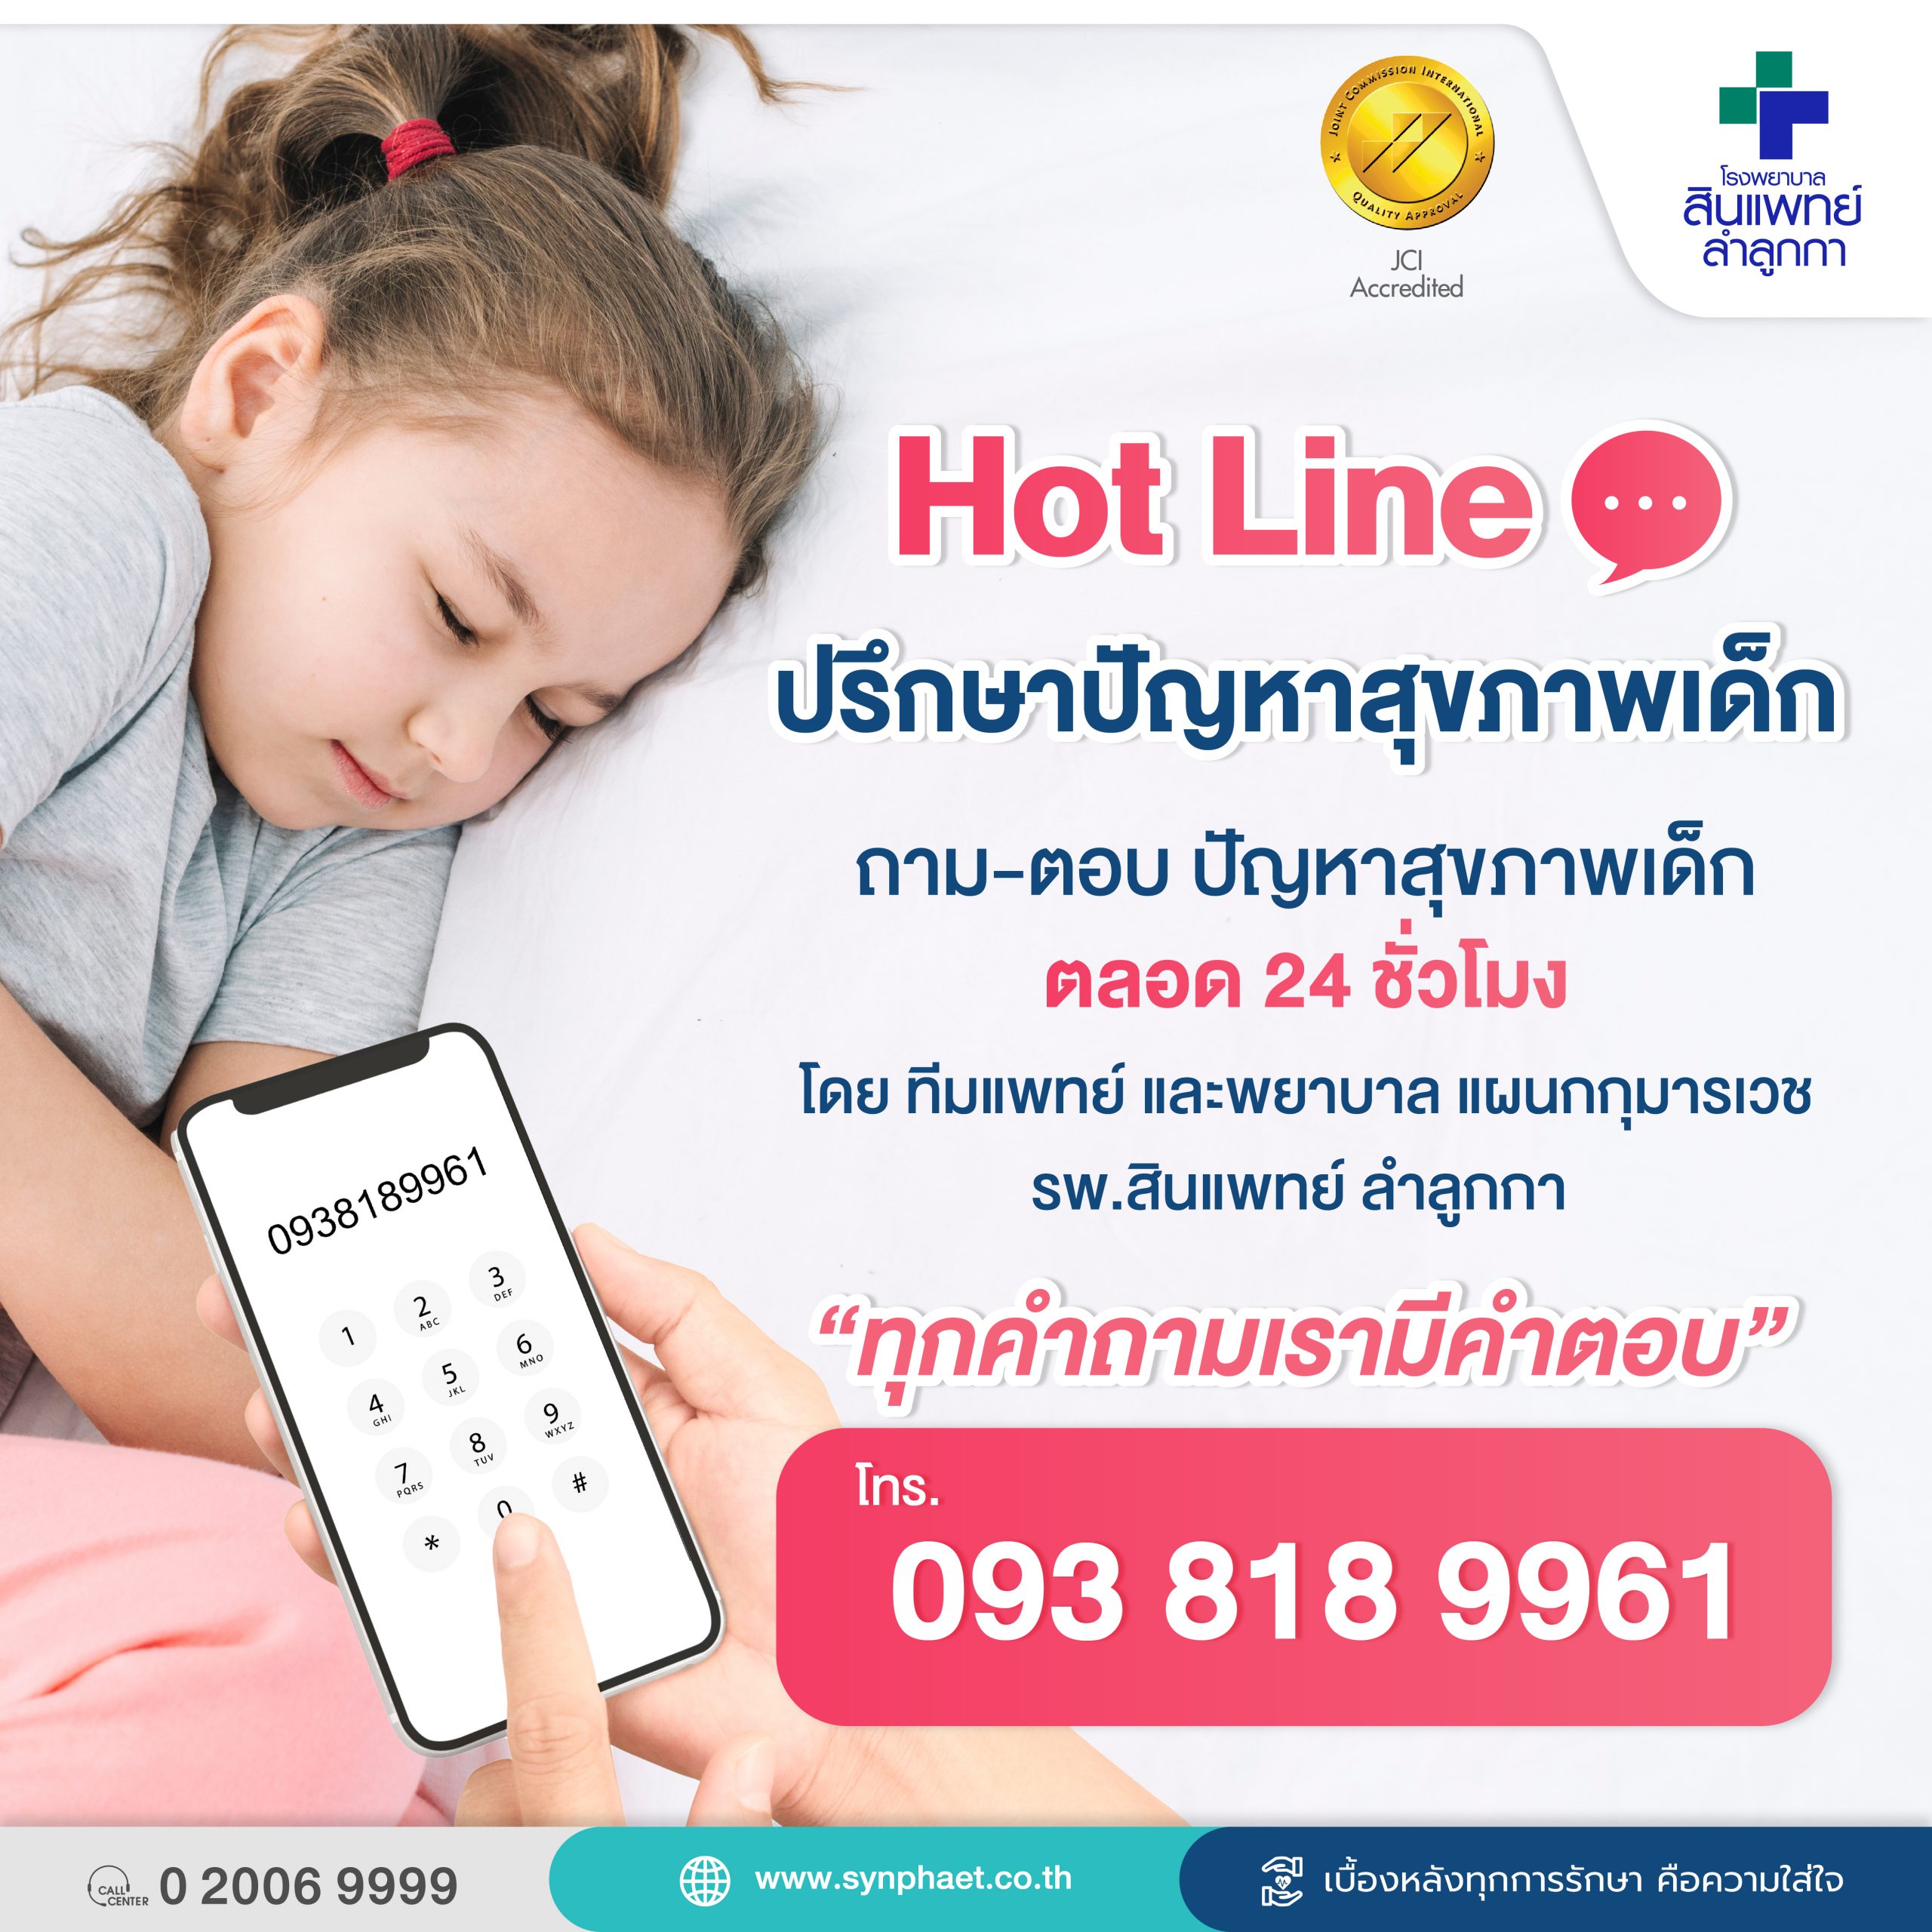 Hot Line ปรึกษาปัญหาสุขภาพเด็ก | โรงพยาบาลสินแพทย์ ลำลูกกา